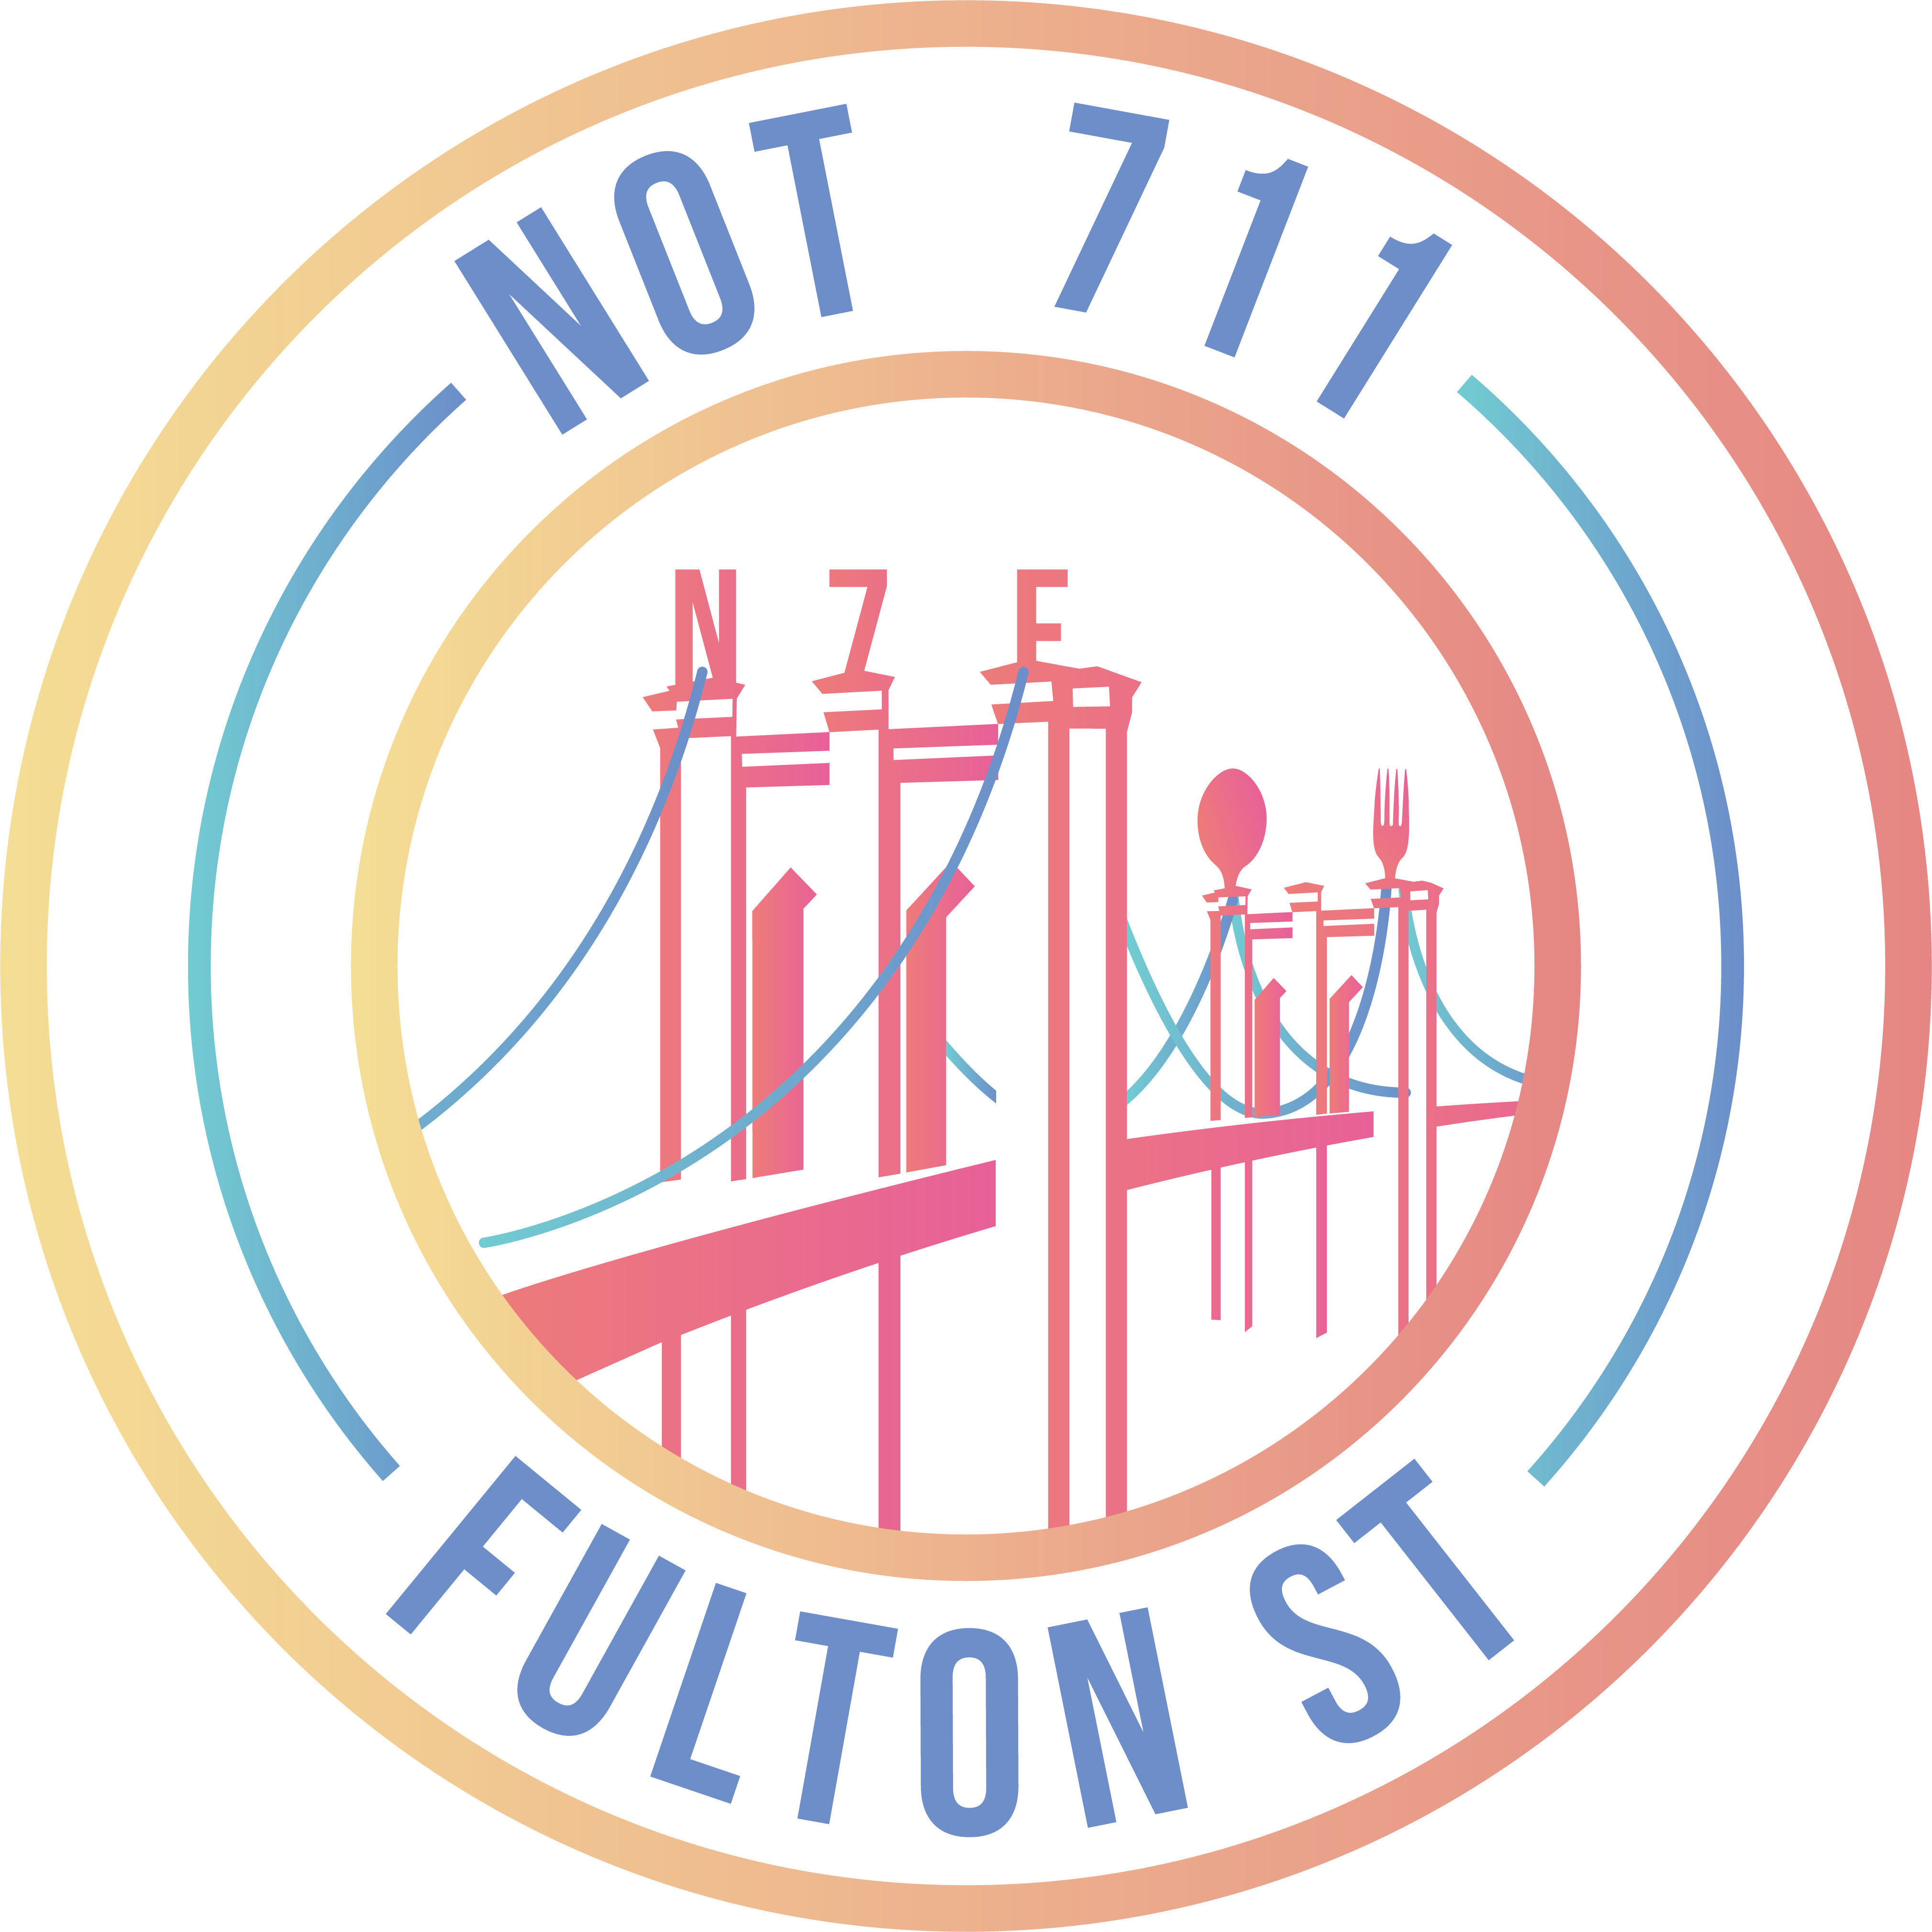 Not 711 Fulton St